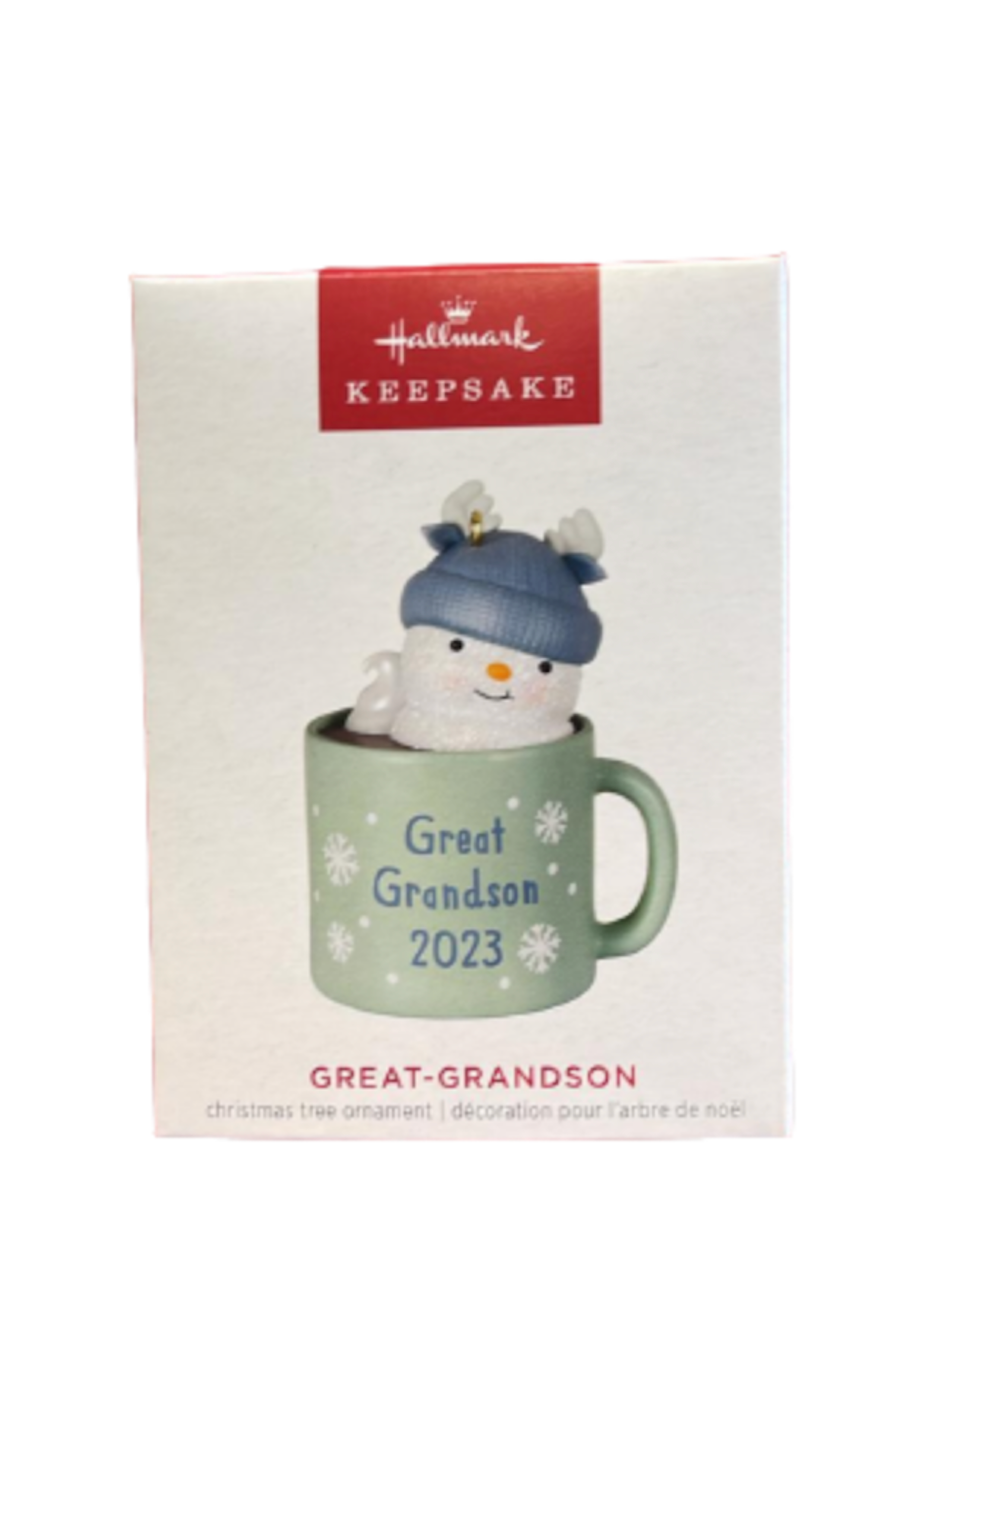 Hallmark 2023 Keepsake Great Grandson Hot Cocoa Mug Christmas Ornament New Box